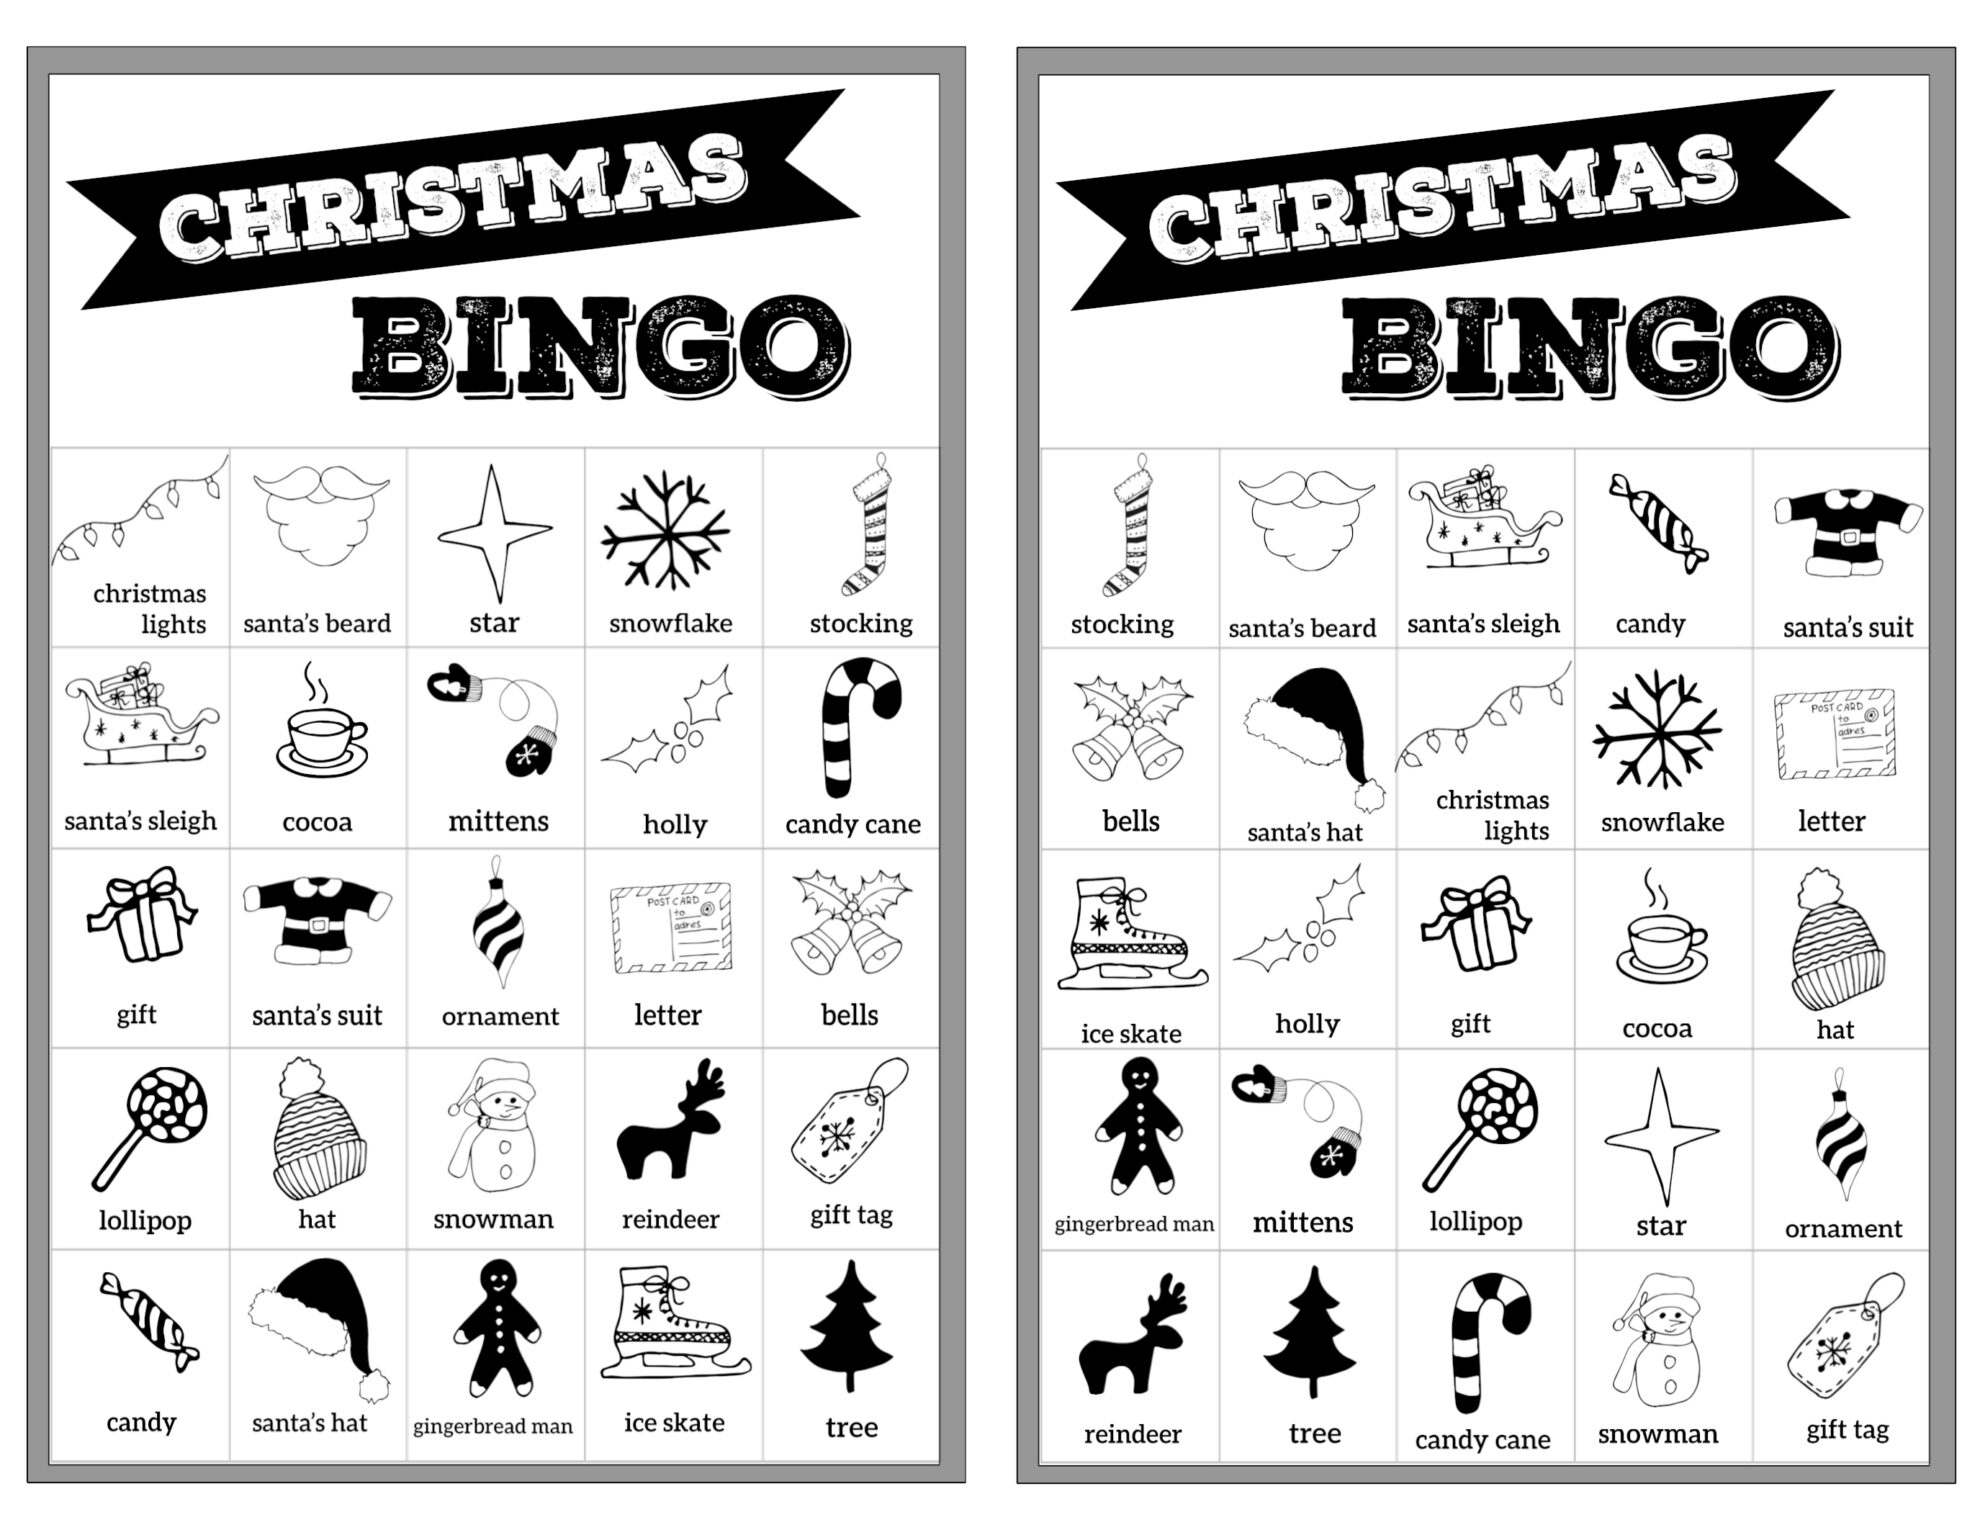 Free Christmas Bingo Printable Cards - Paper Trail Design - Print Bingo Cards For Christmas